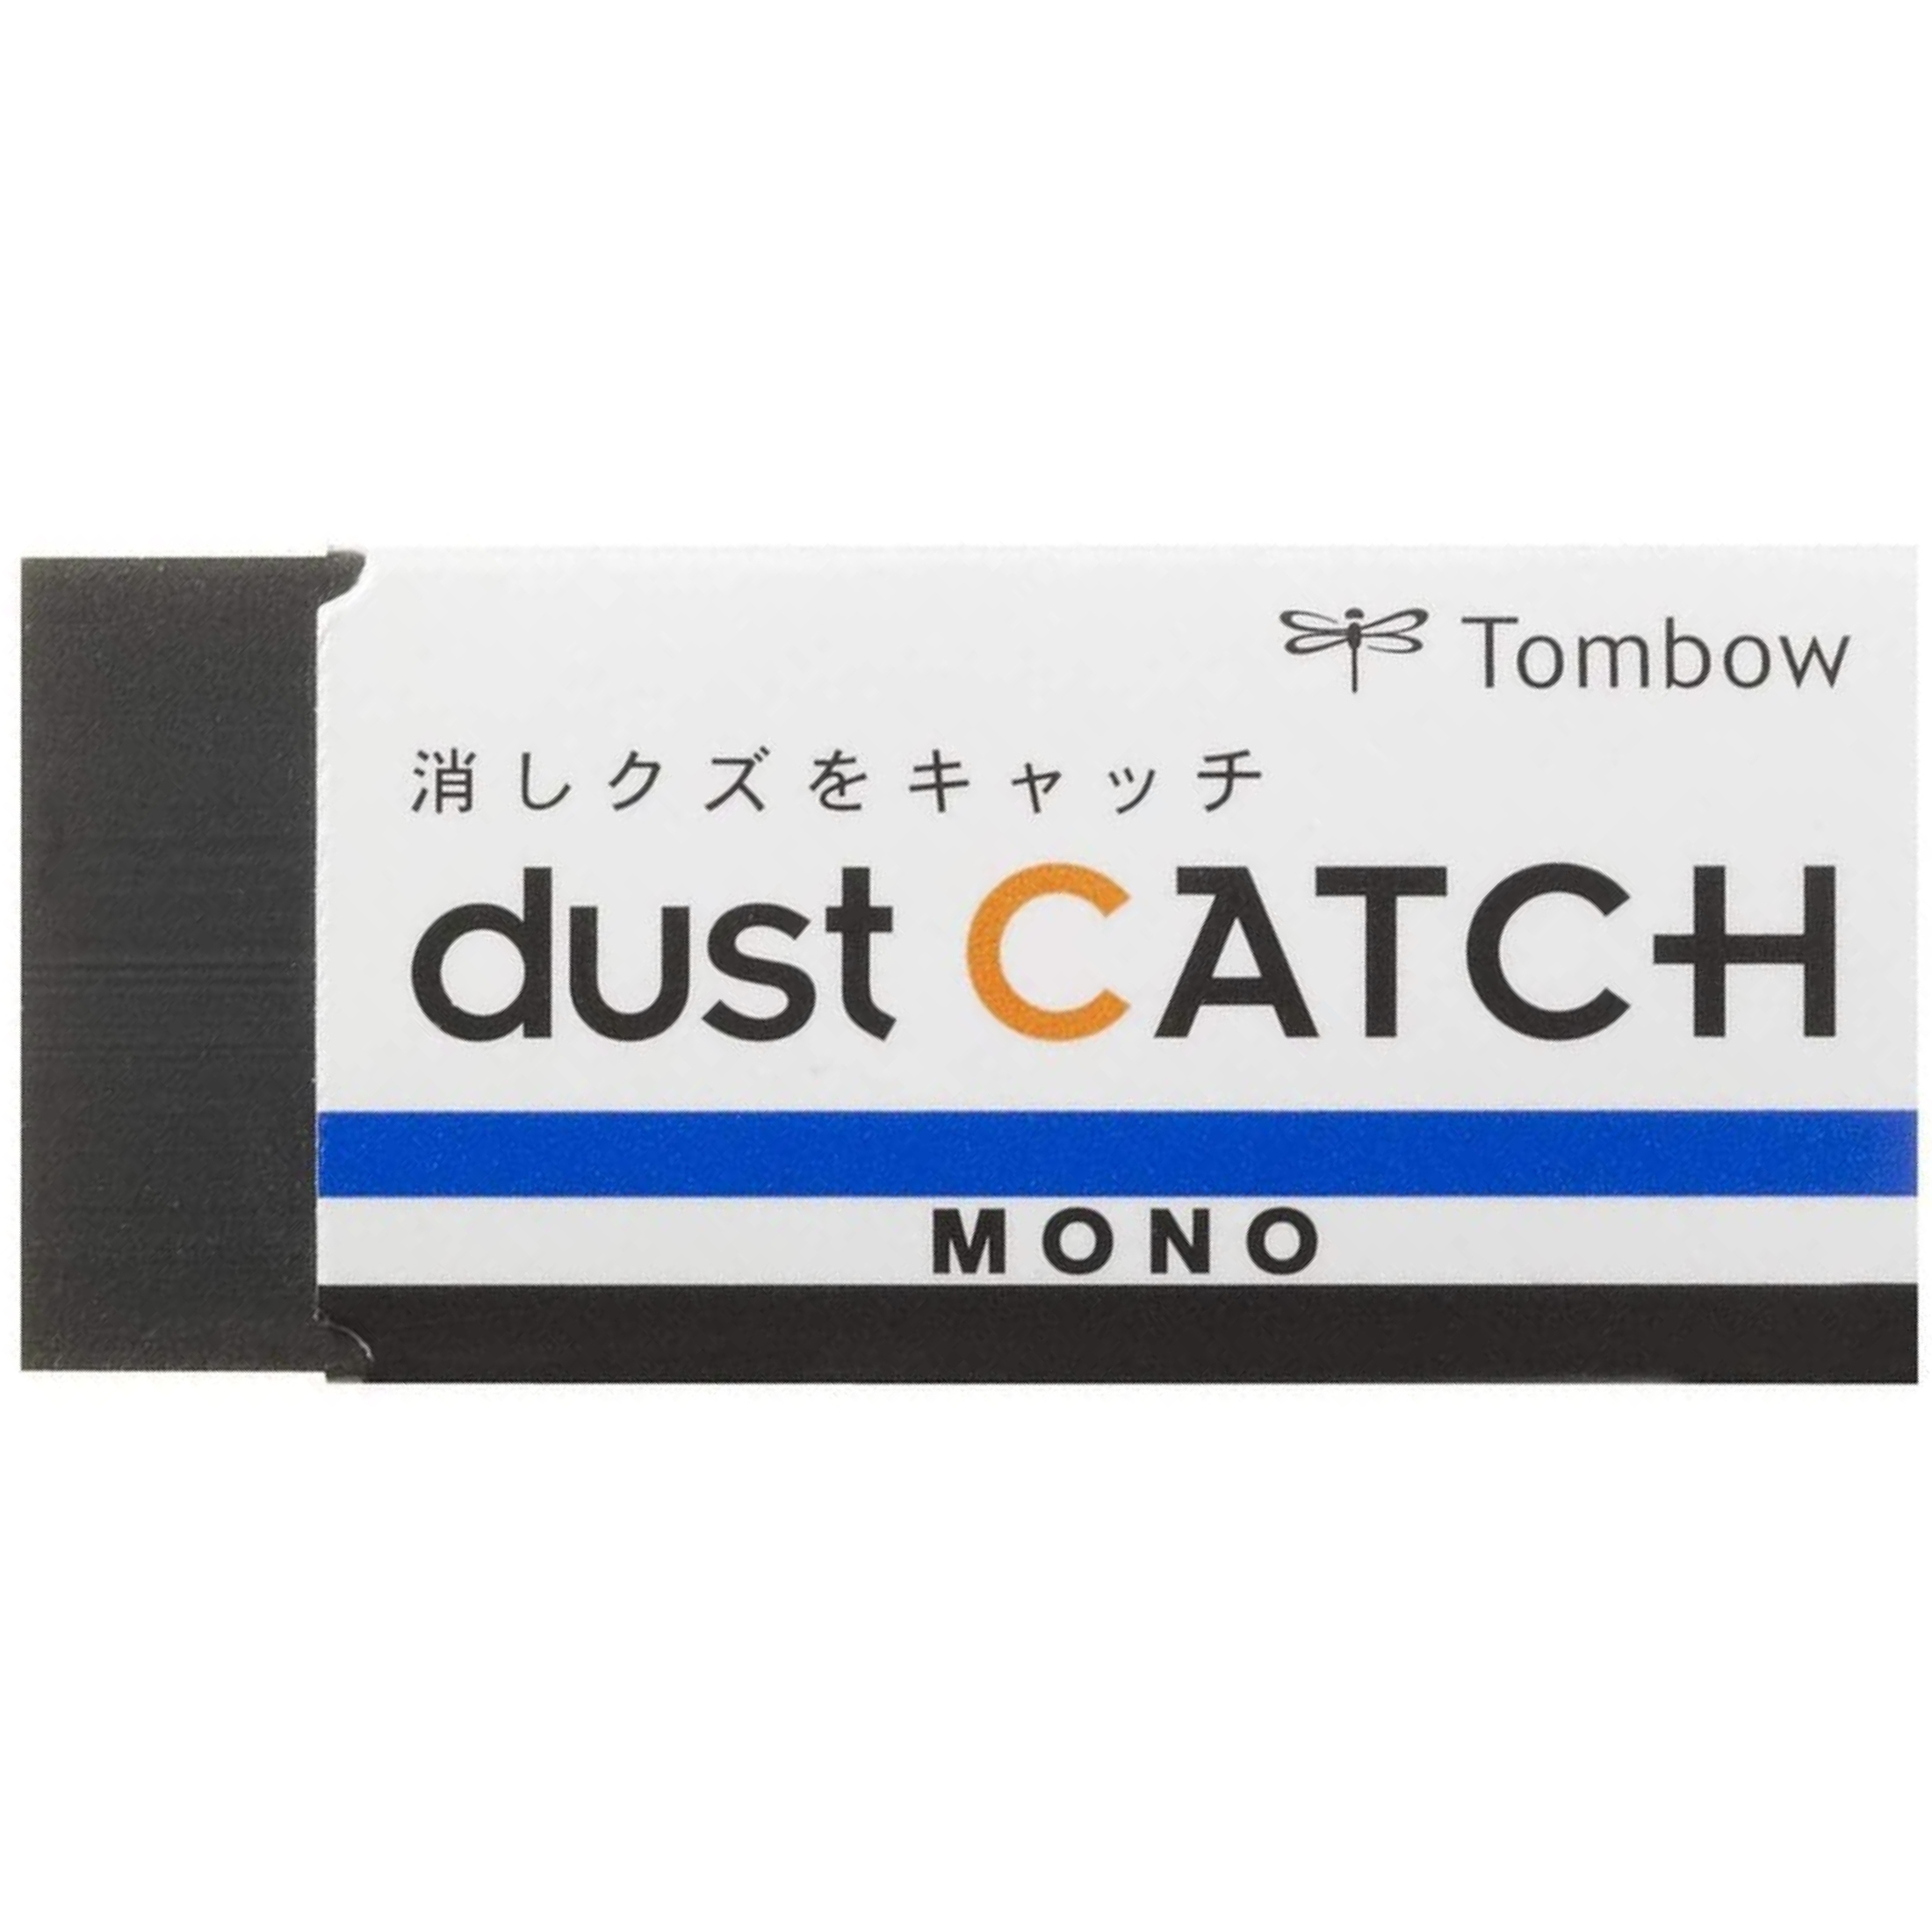 Borracha Mono Dust Catch EN- DC Tombow